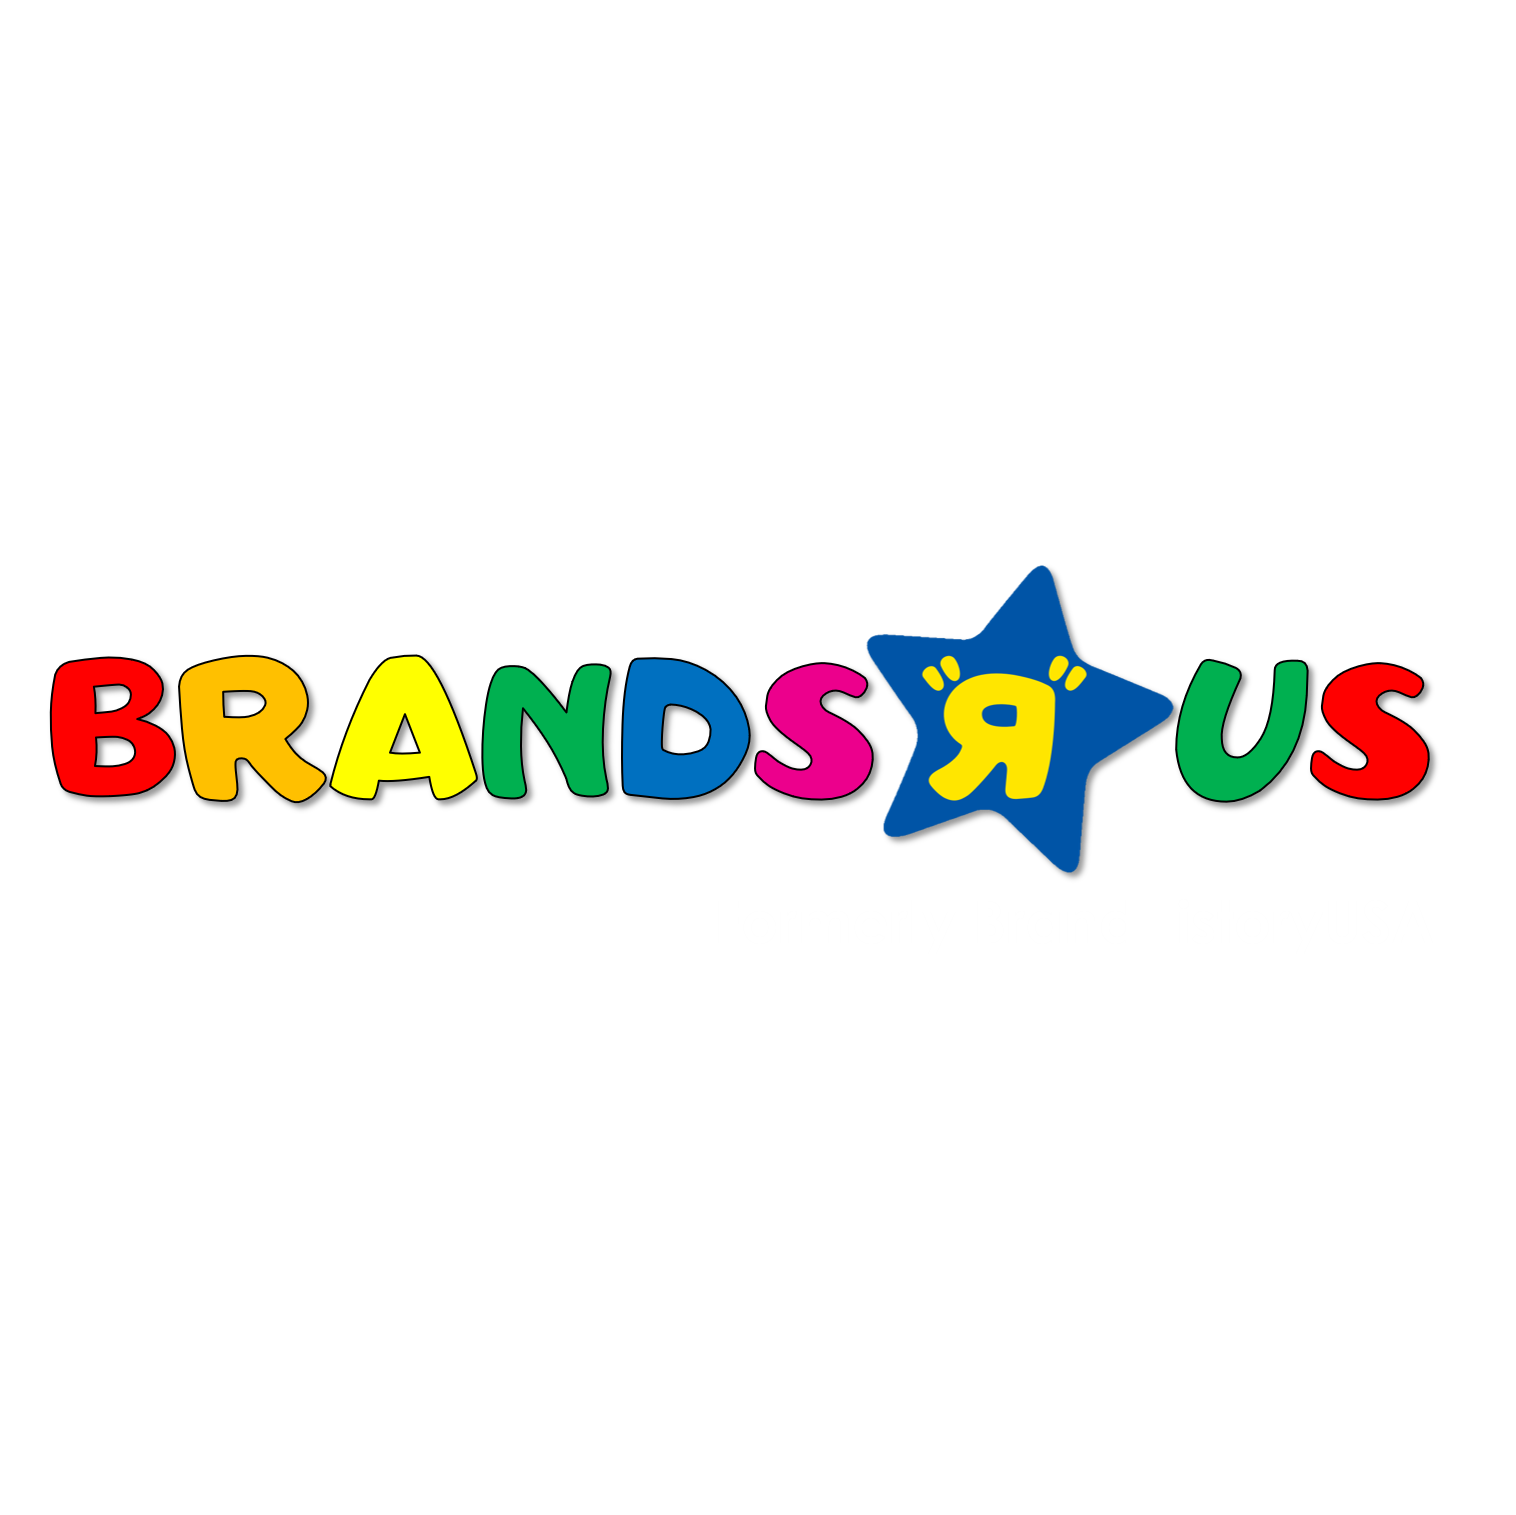 Brands "R" Us